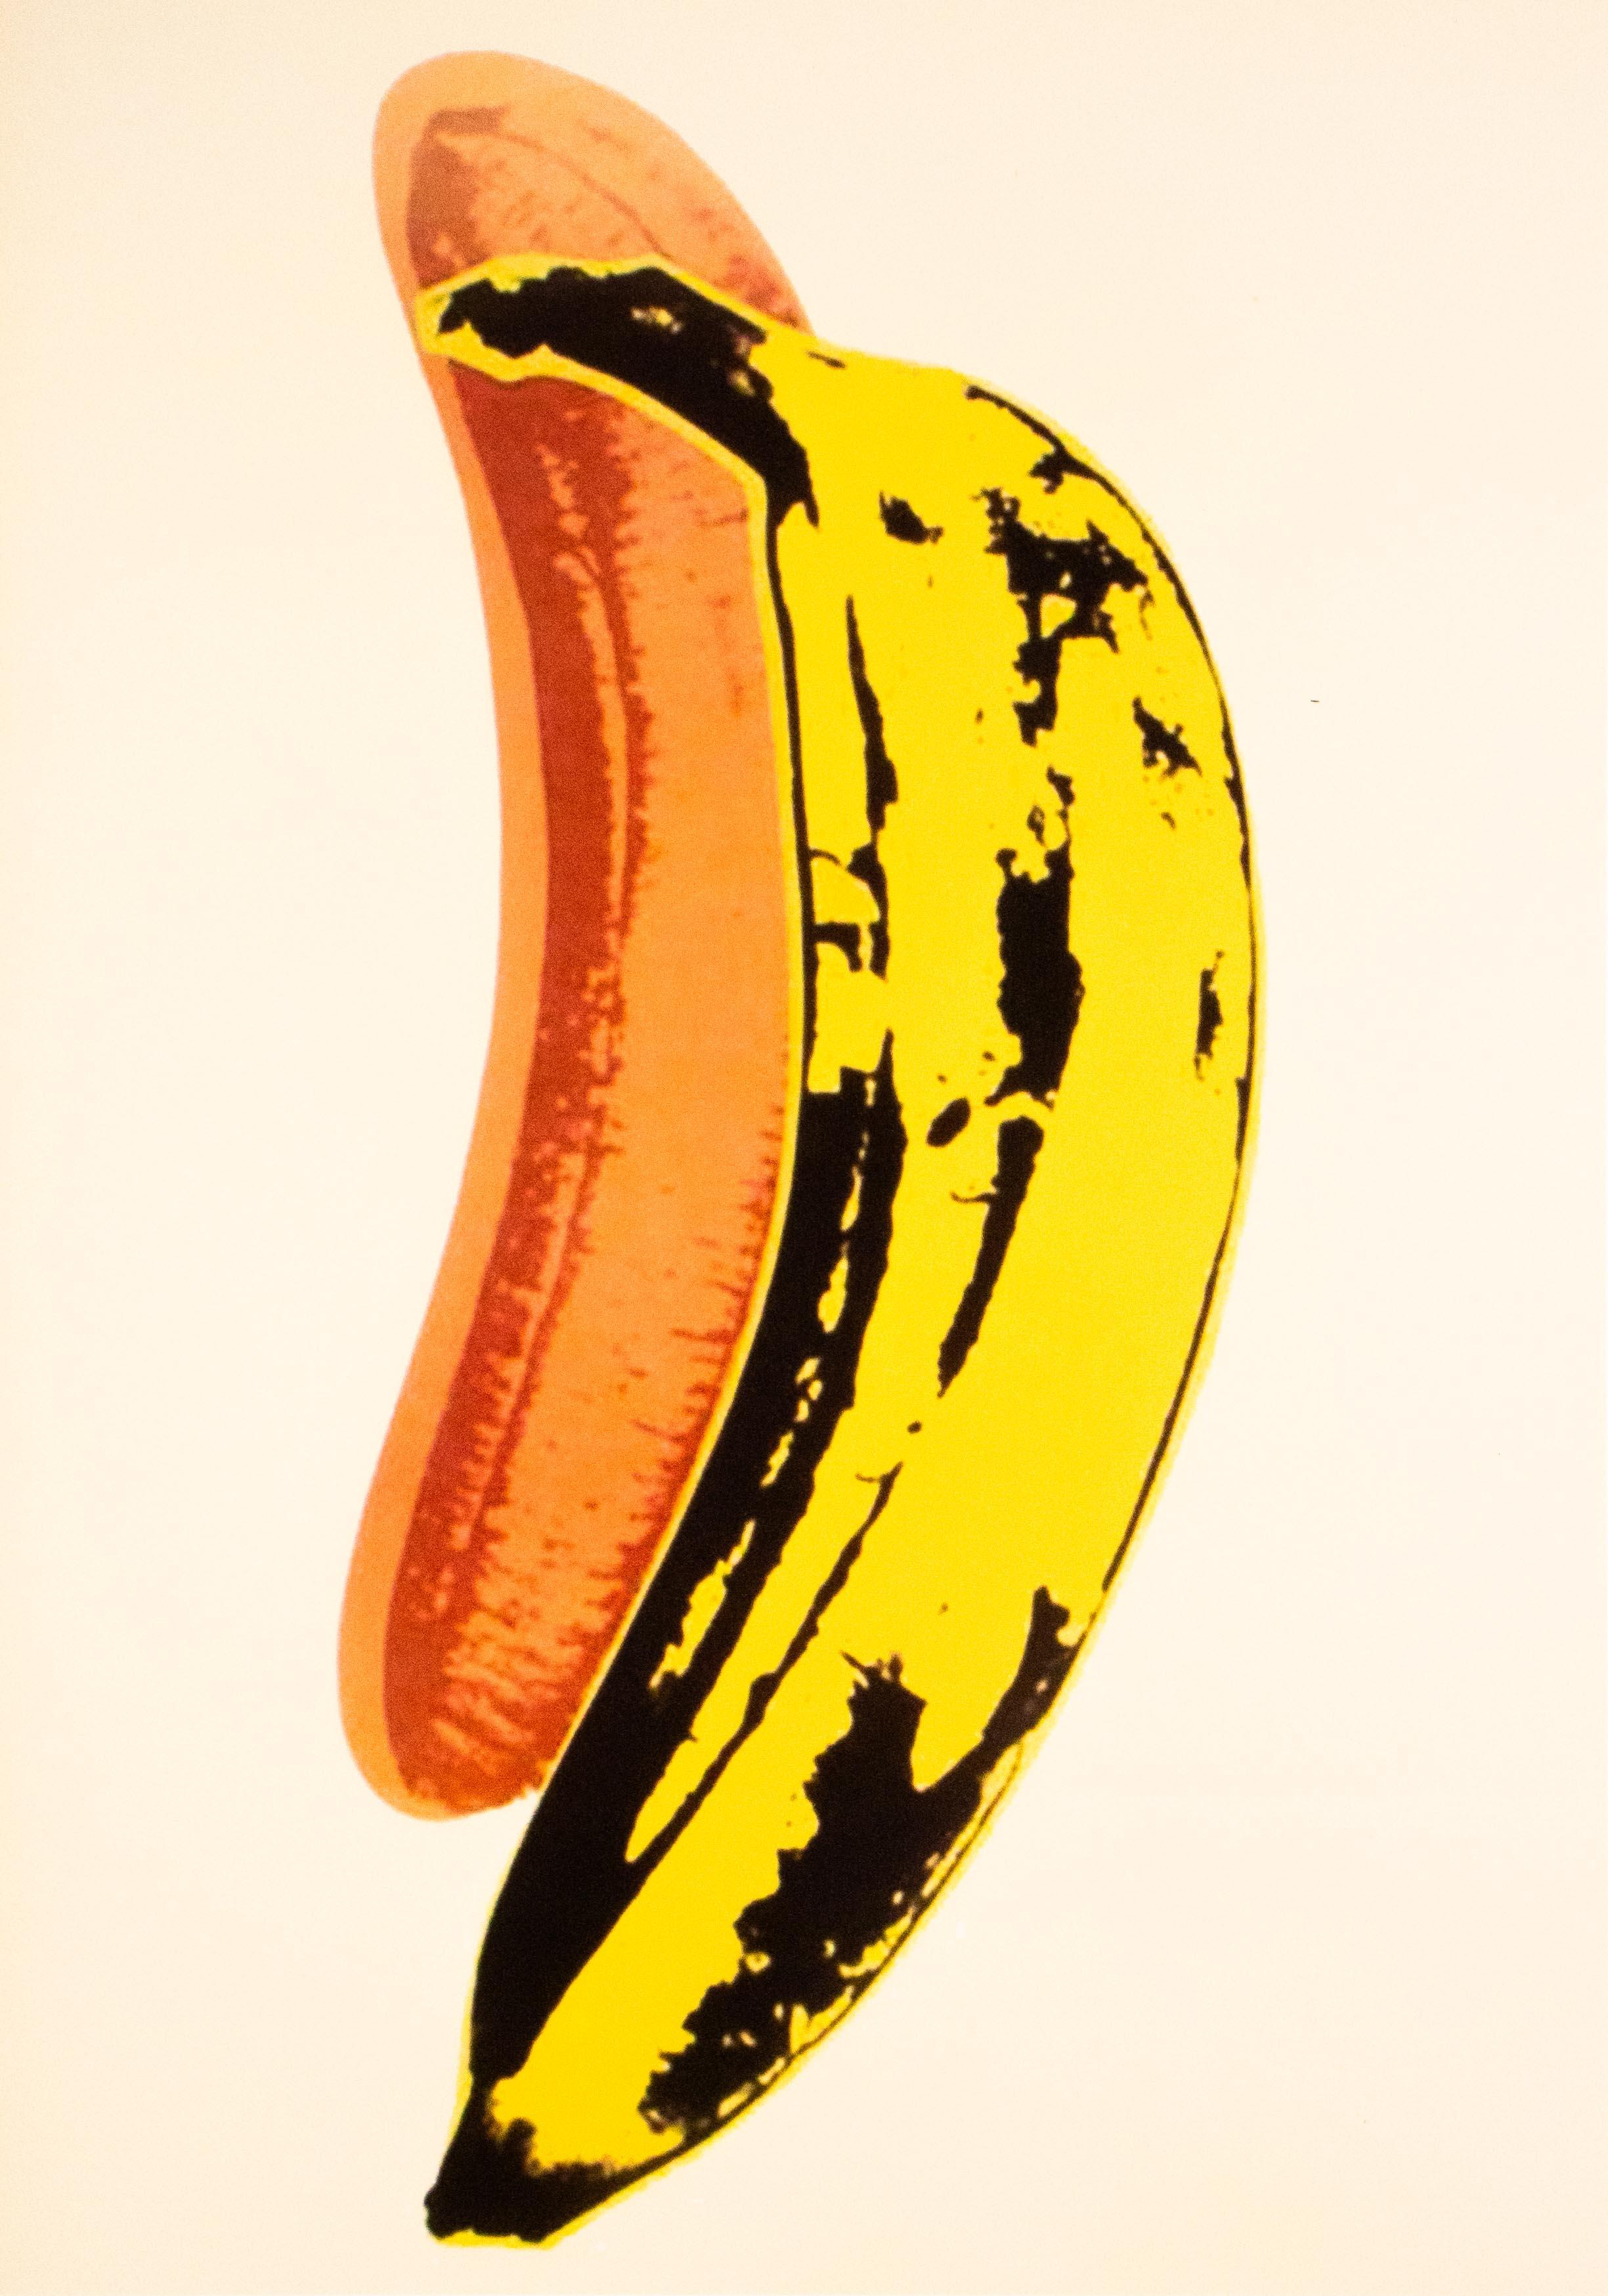 Andy Warhol Figurative Print - Banana - 1983 - Original Lithograph - Limited Edition Print - 13/100 pcs.